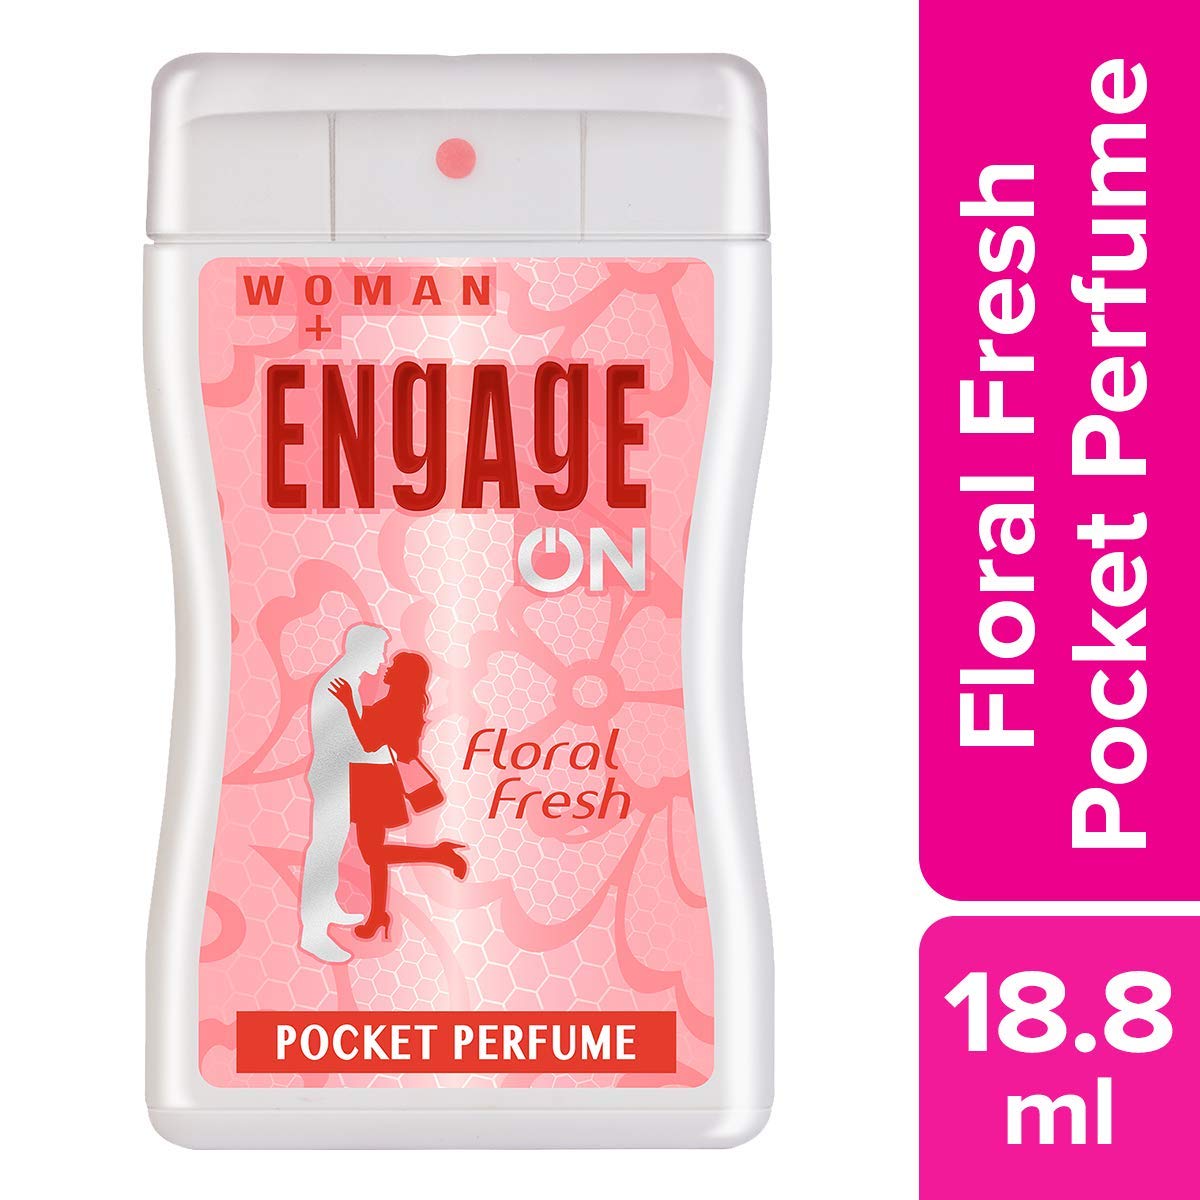 Engage On Woman Pocket Perfume - Floral Fresh (18.8ml) - Niram